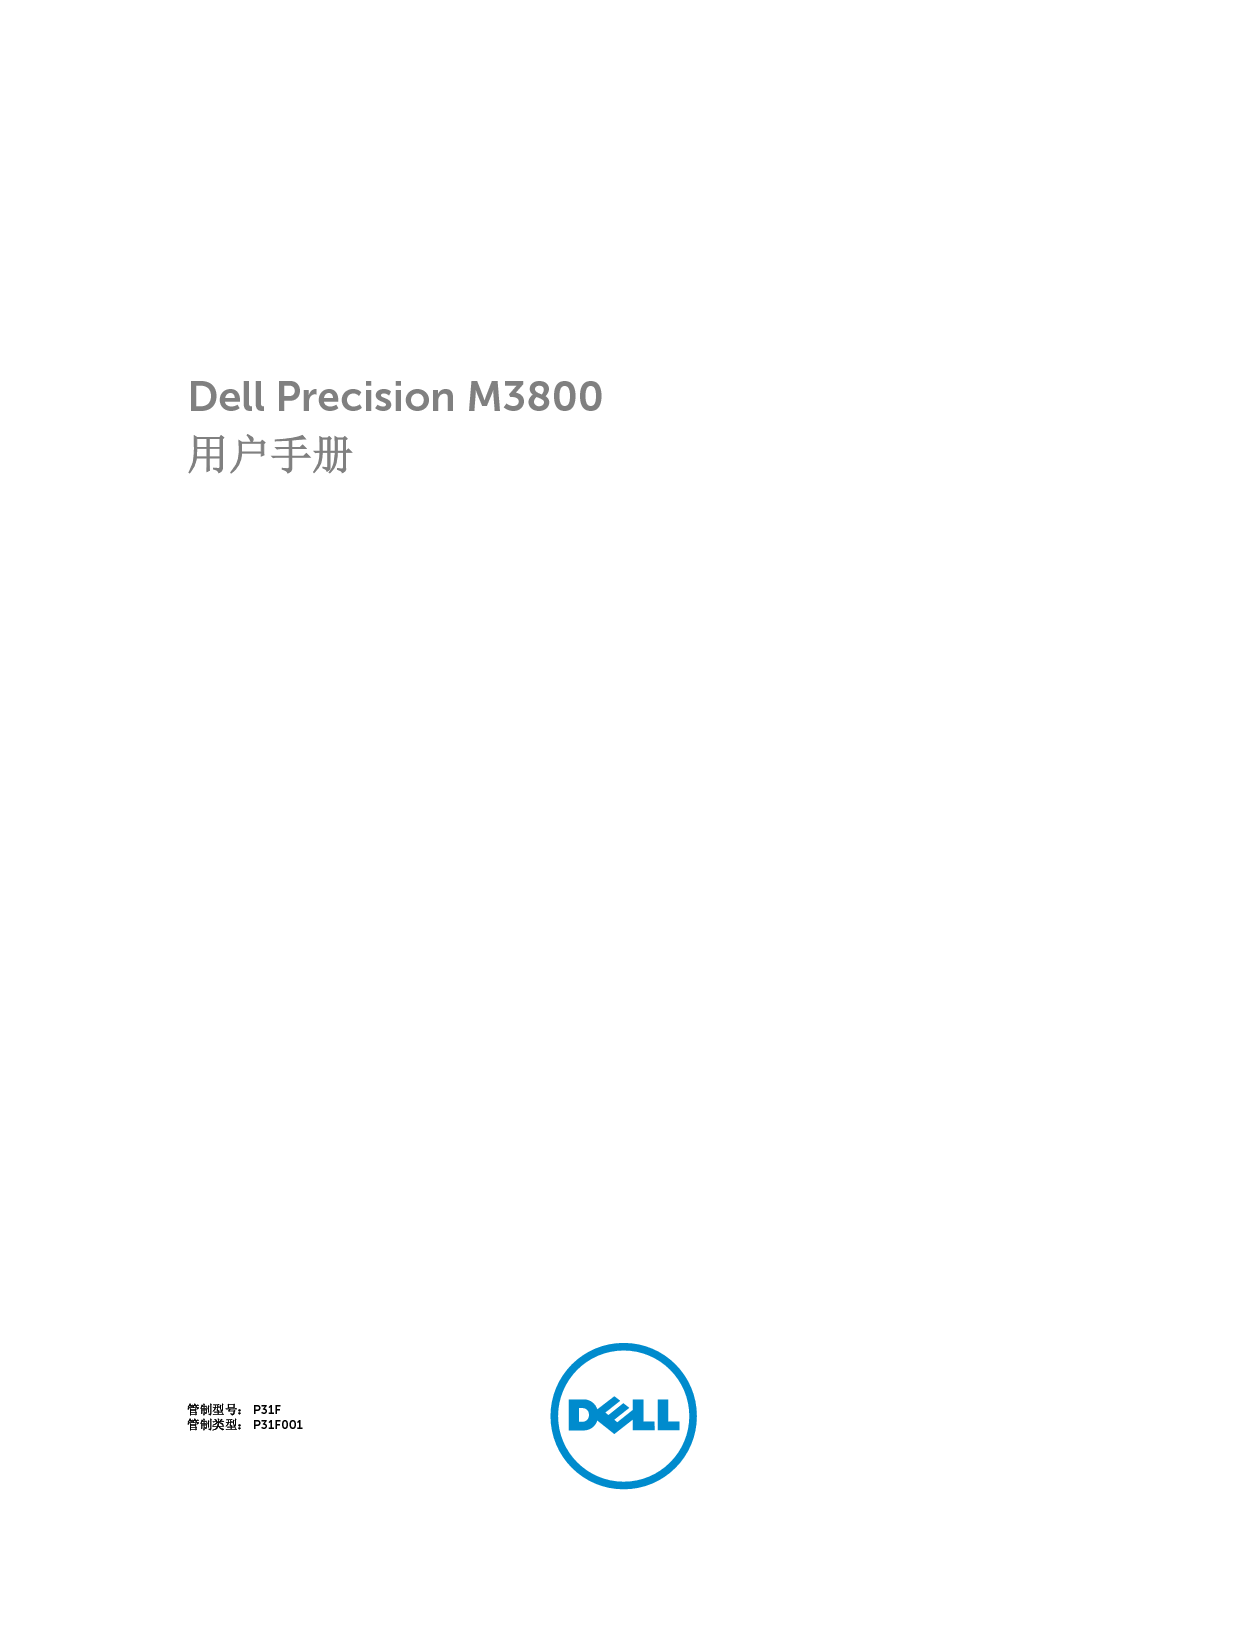 戴尔 Dell Precision M3800 用户手册 封面